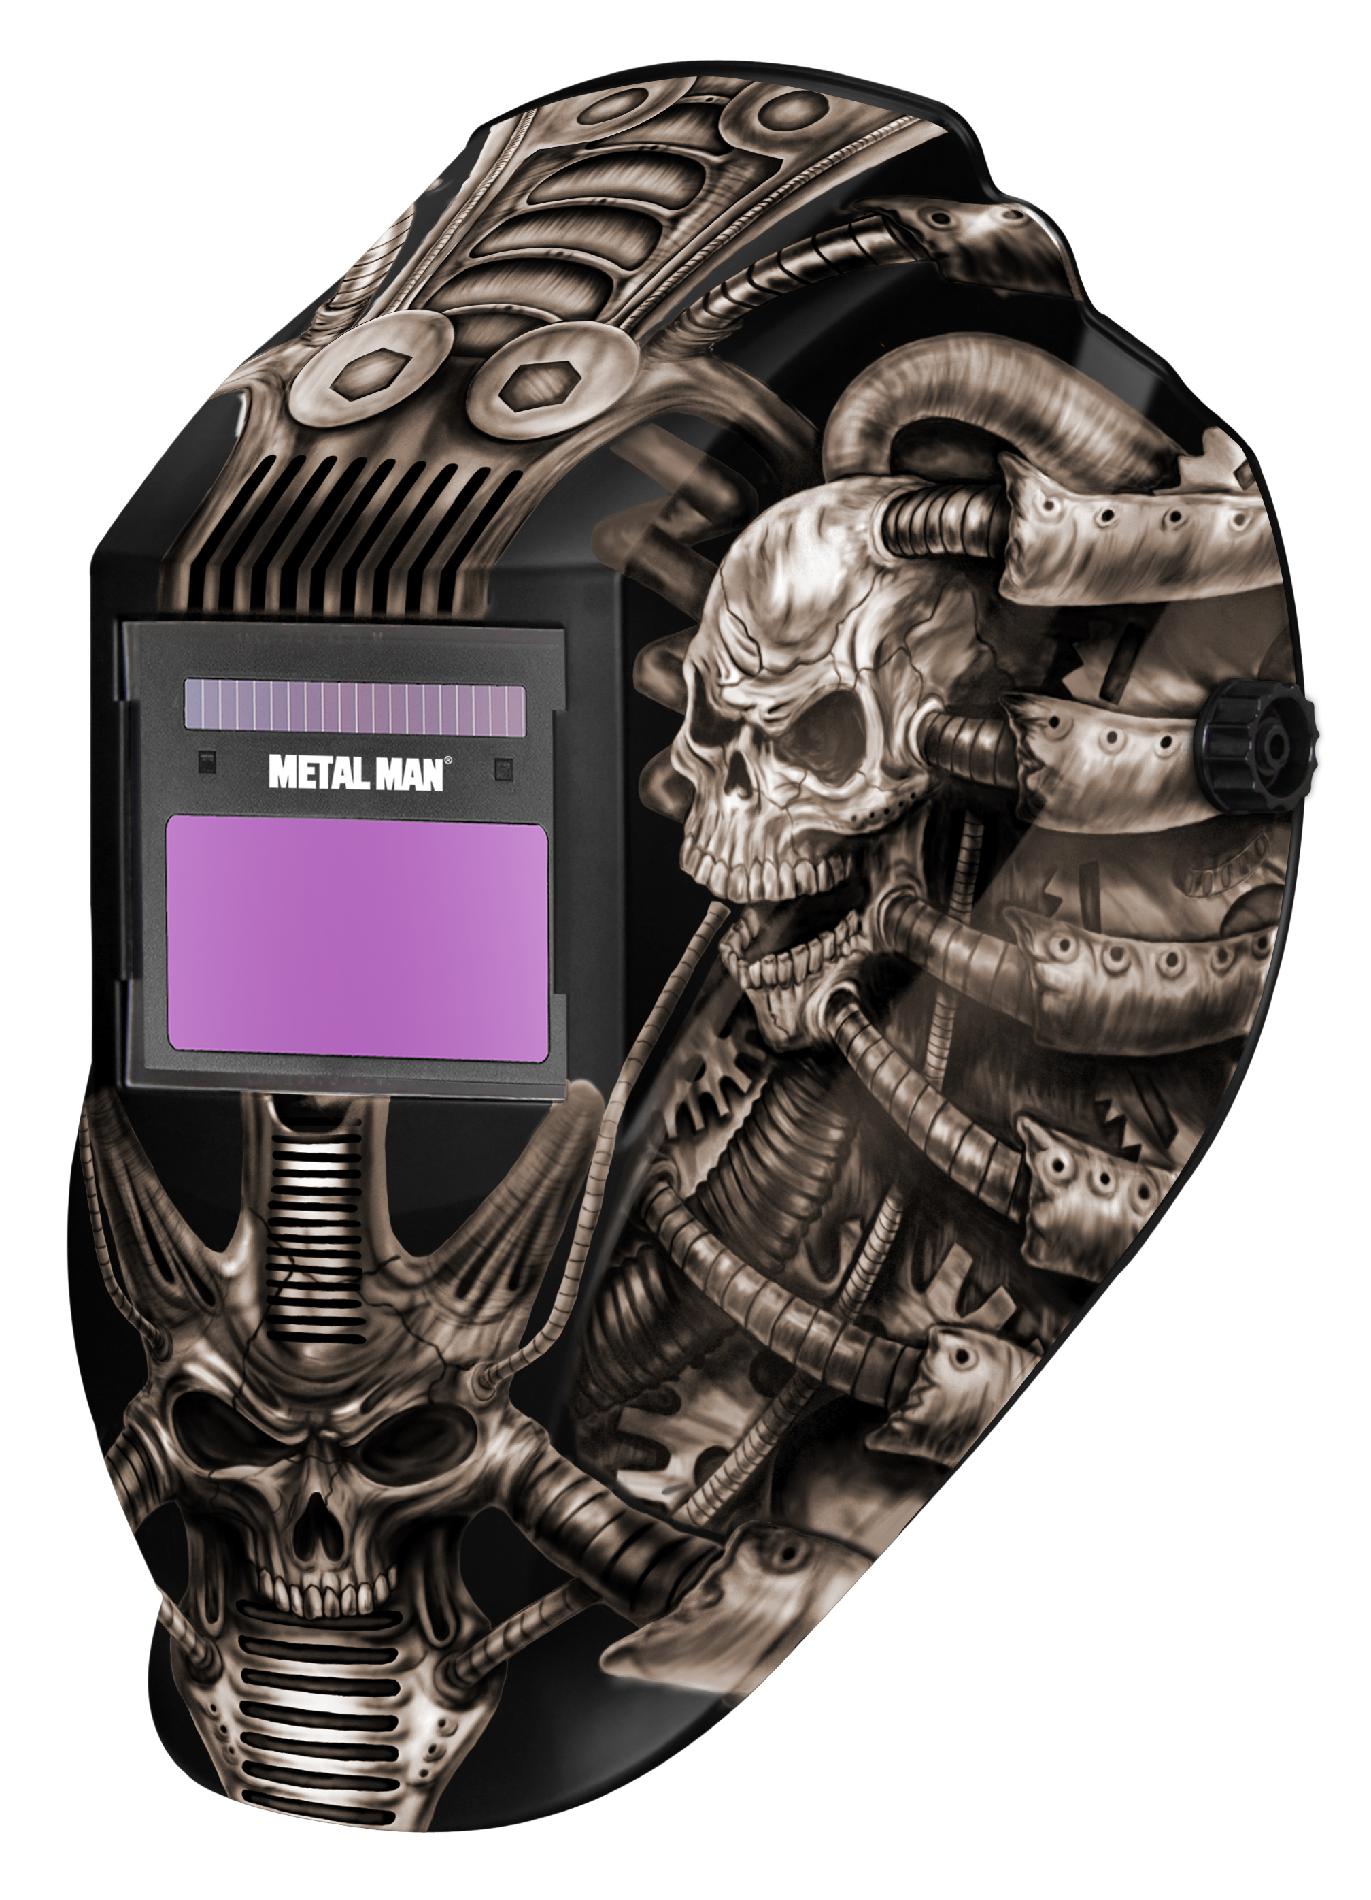 Metal Man ATEC8720SGC Techno Skull 9-13 Shade Professional Auto Darkening Welding Helmet